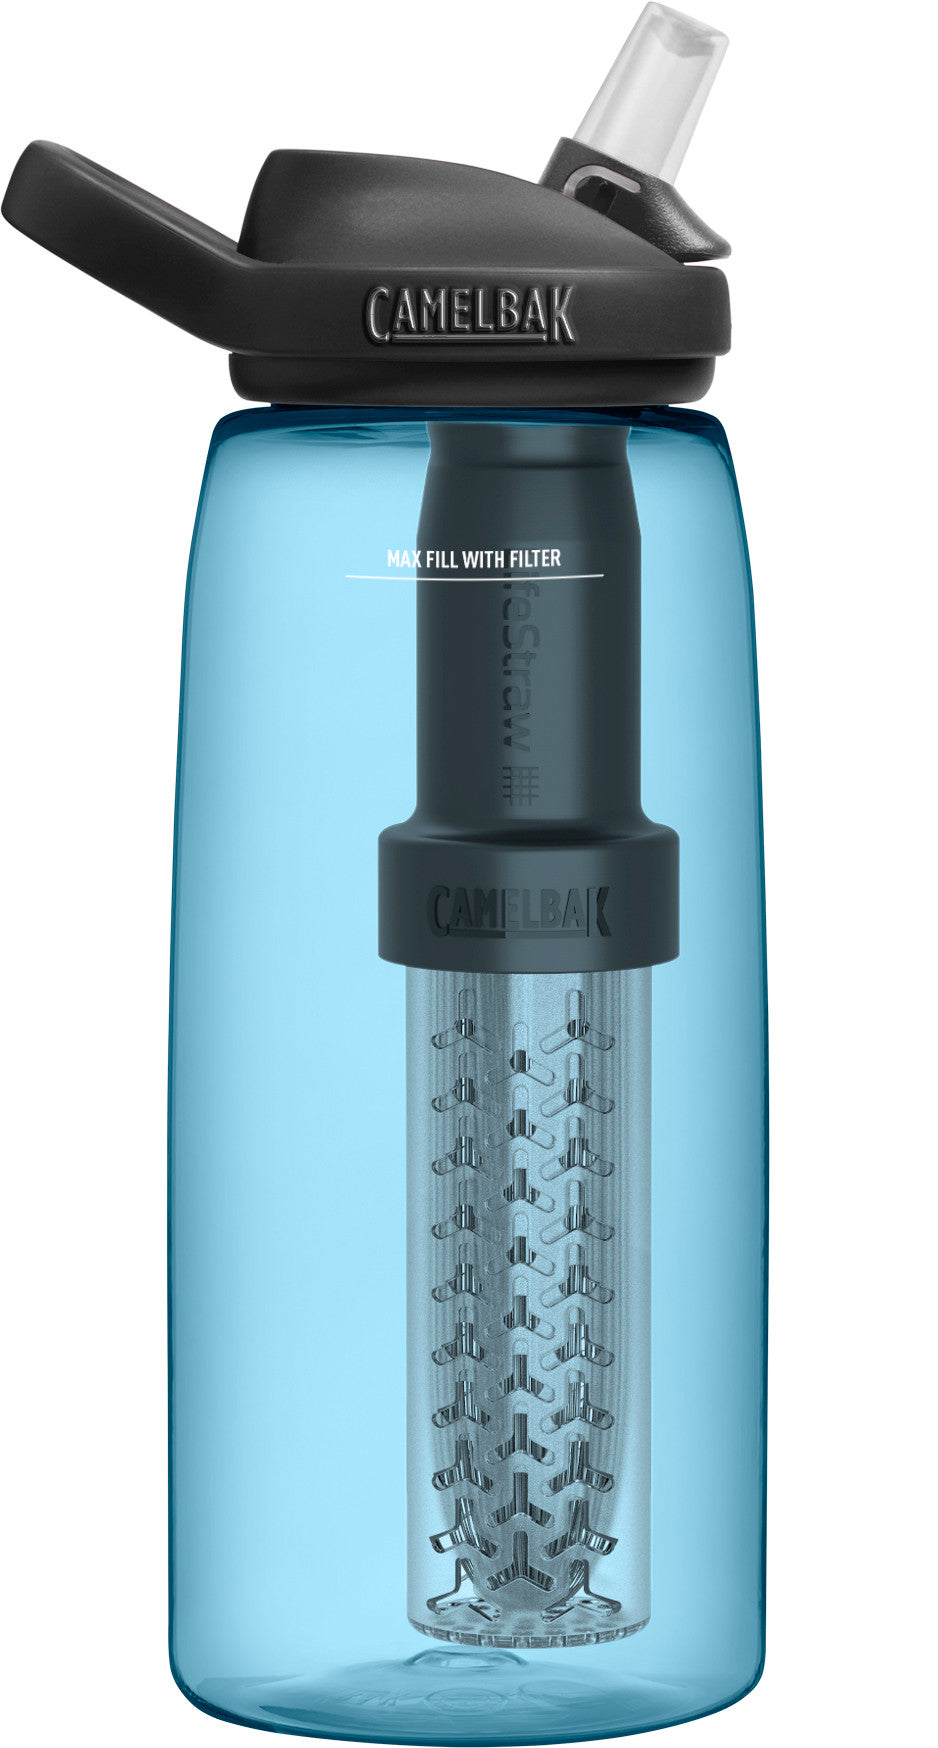 CamelBak Eddy+ 32oz Tritan Renew Water Bottle- Light Blue